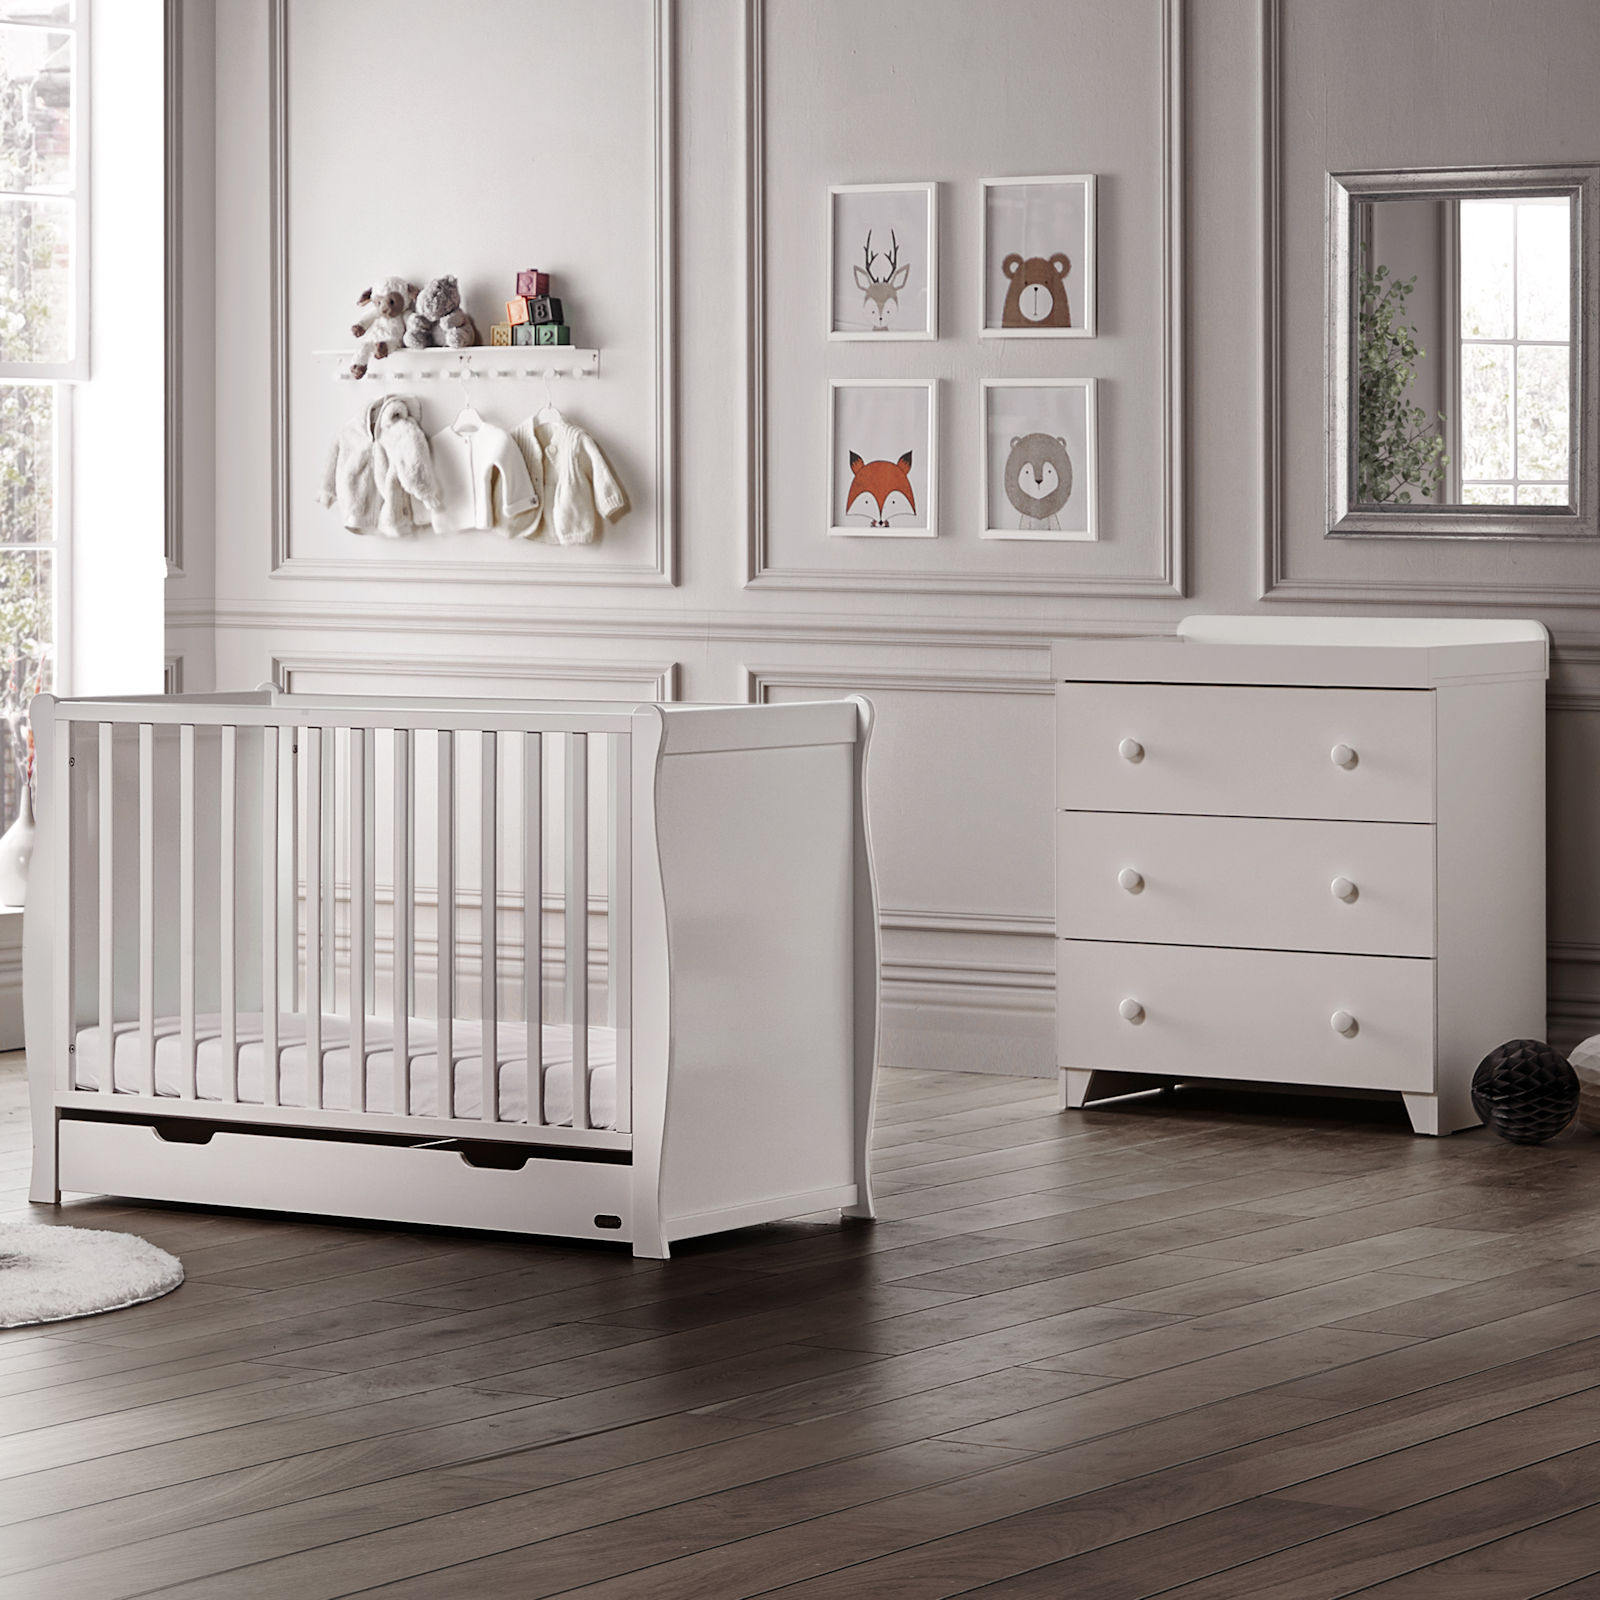 Puggle Chelford Sleigh Cot 4 Piece Nursery Furniture Set - White